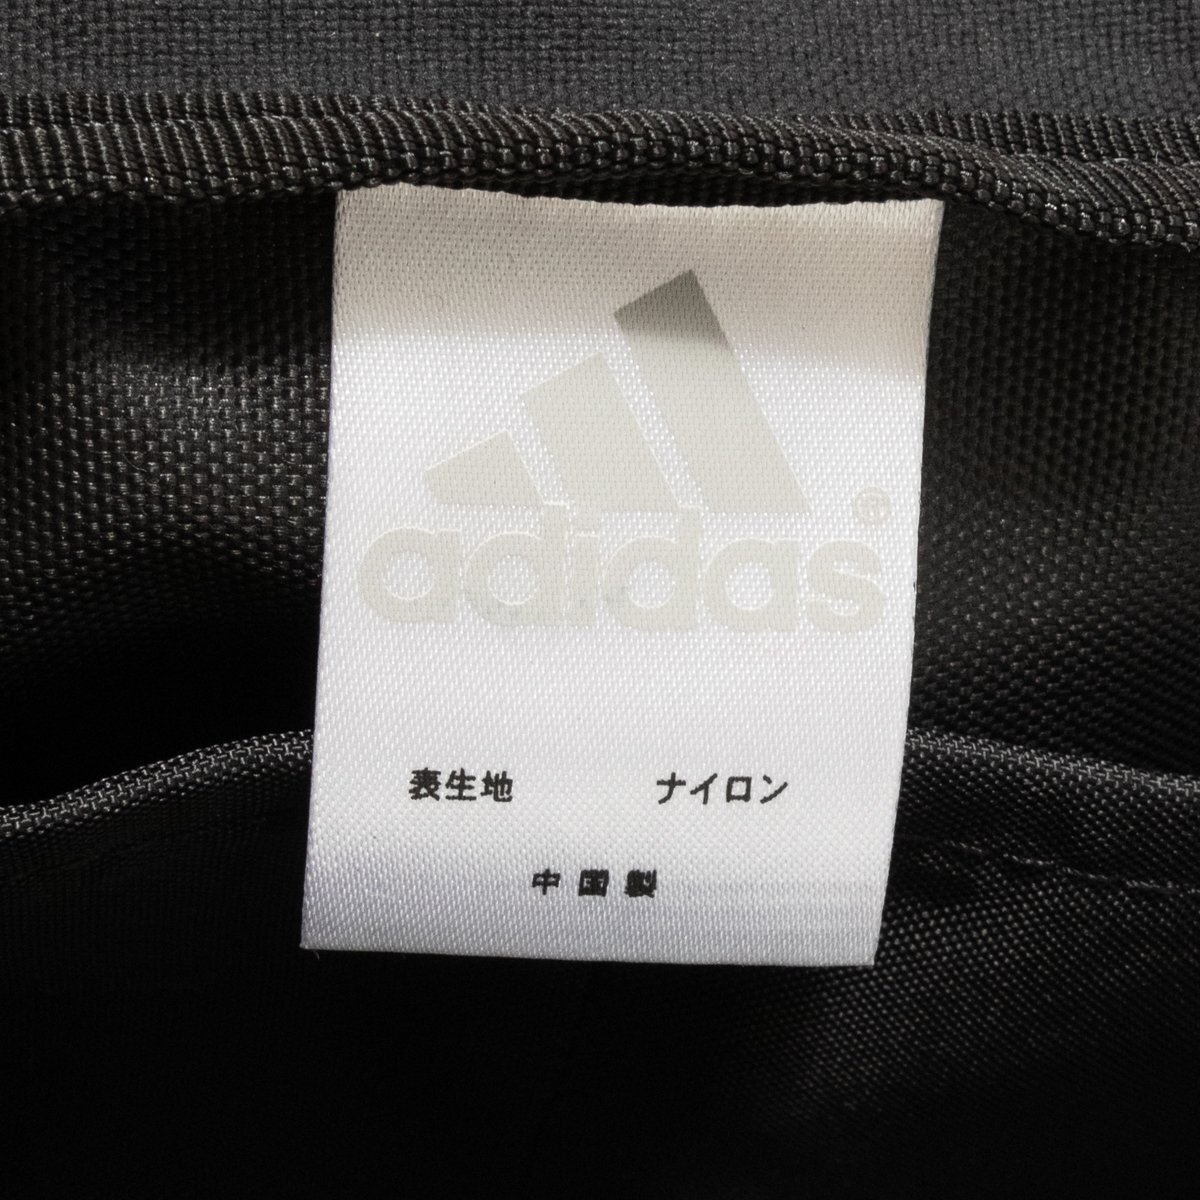  unused tag attaching adidas Adidas waist bag black black gray nylon unisex man and woman use simple casual light weight bag bag 